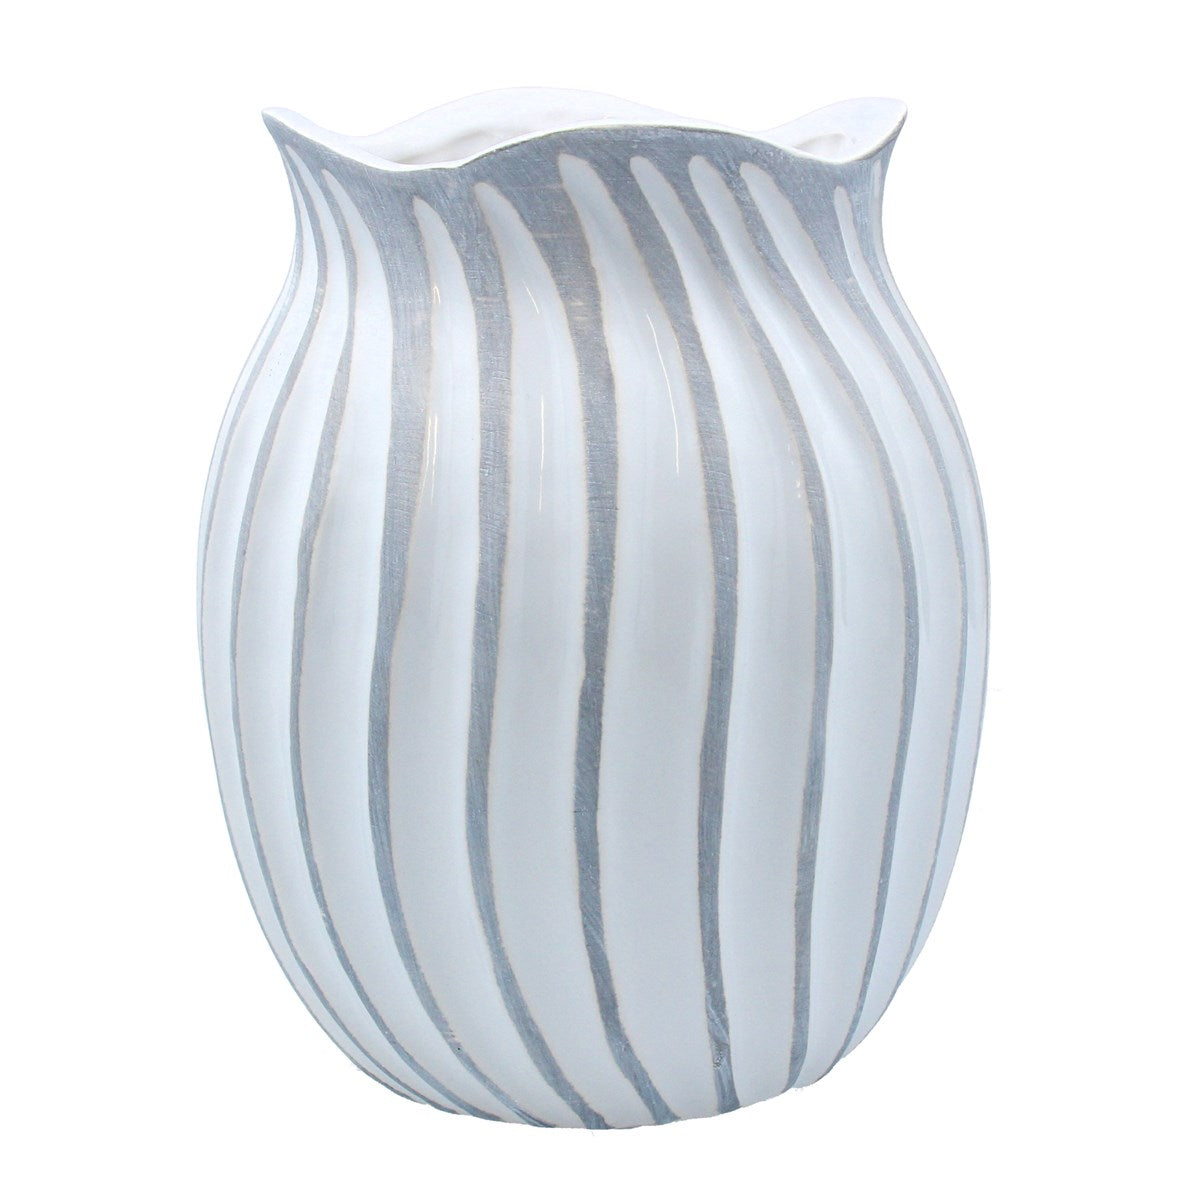 White and grey ceramic wave vase